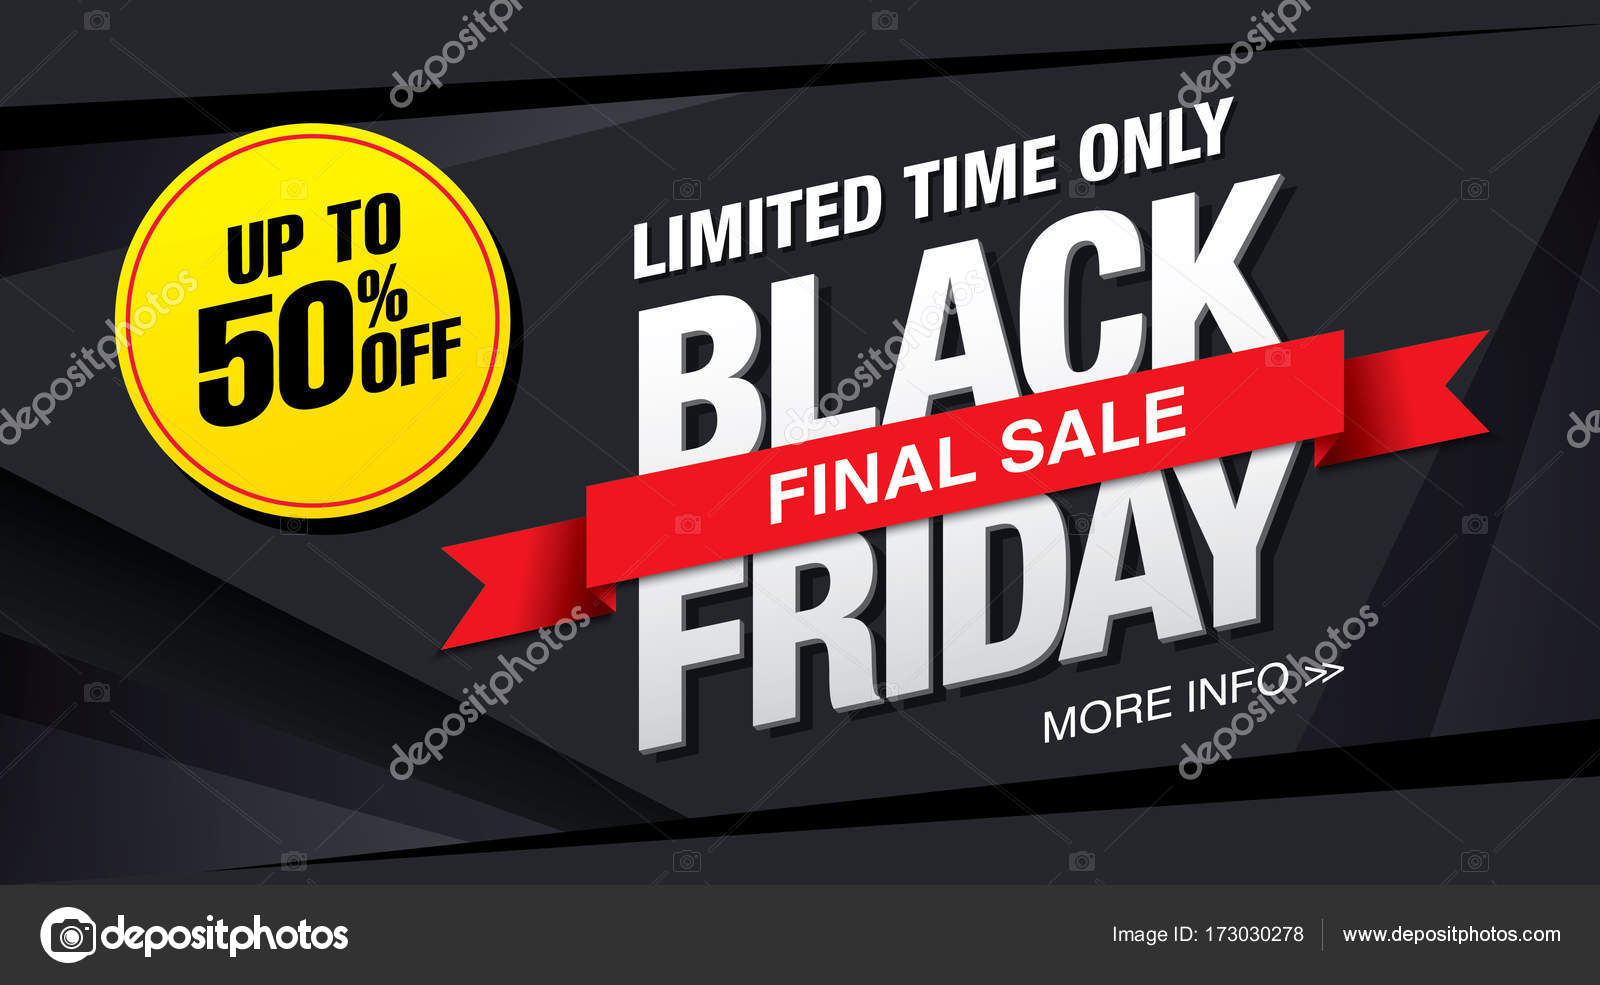 em client discount black friday